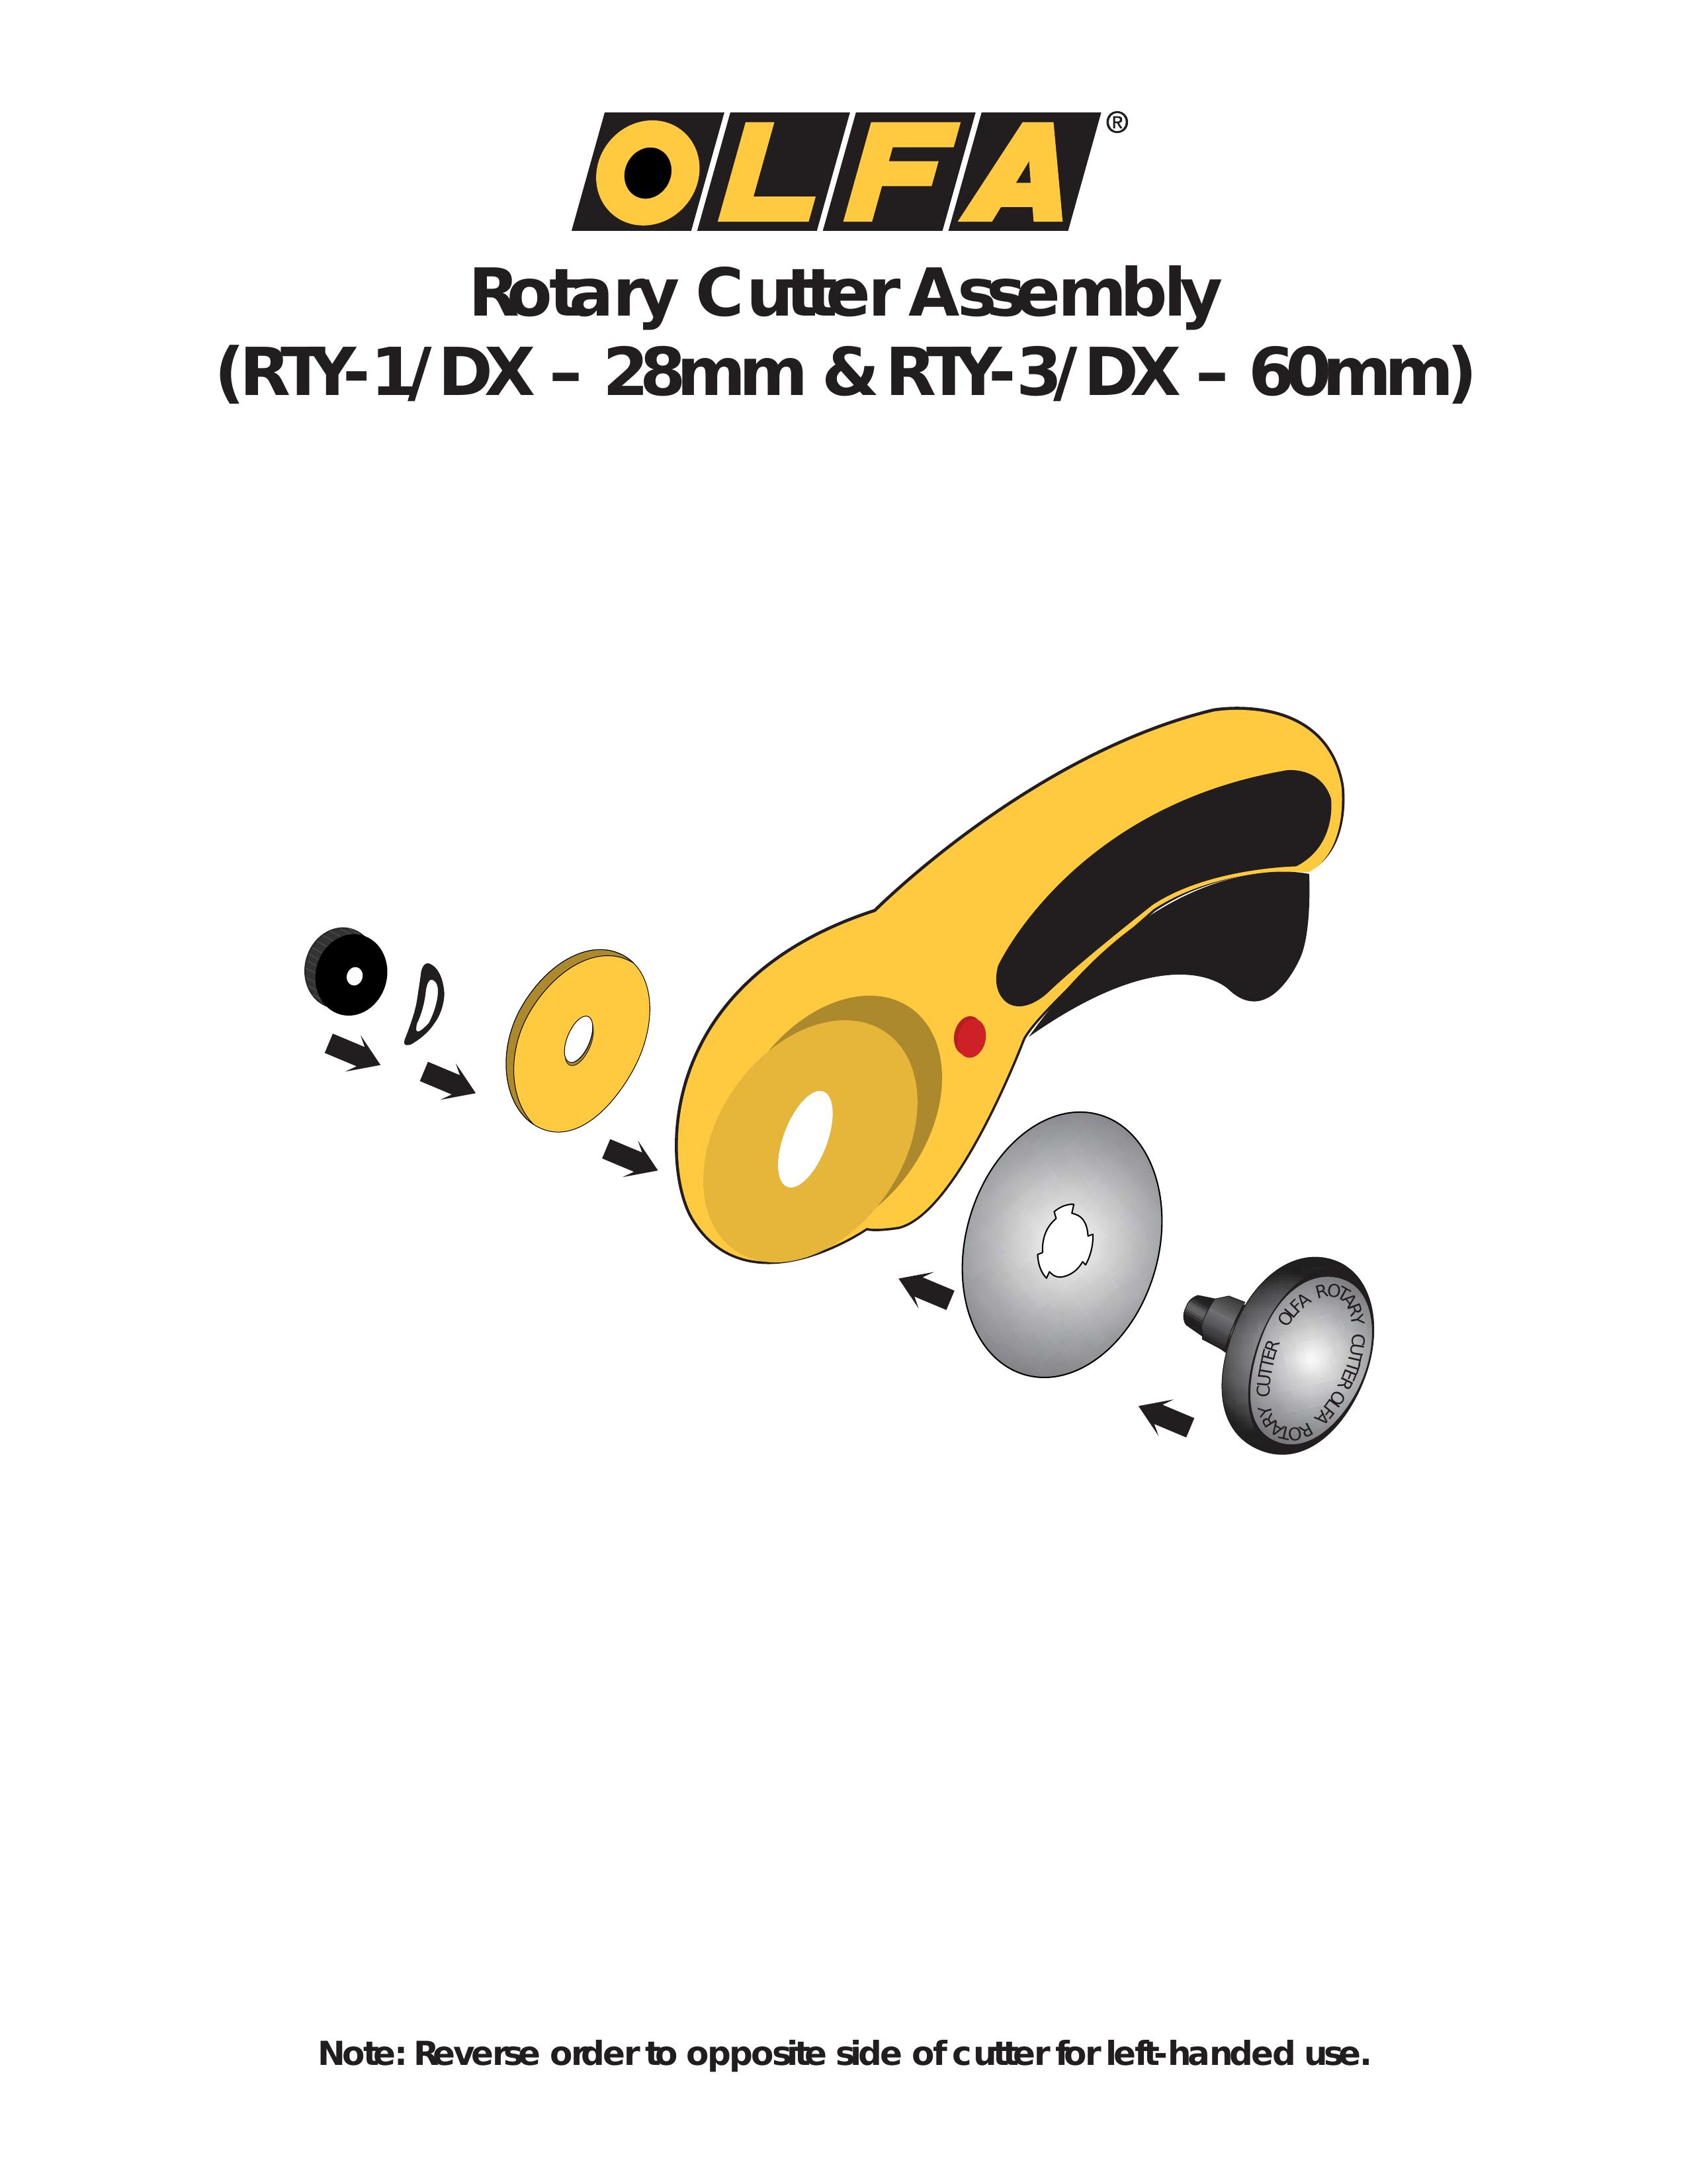 Olfa RTY-3/DX Brush Cutter User Manual